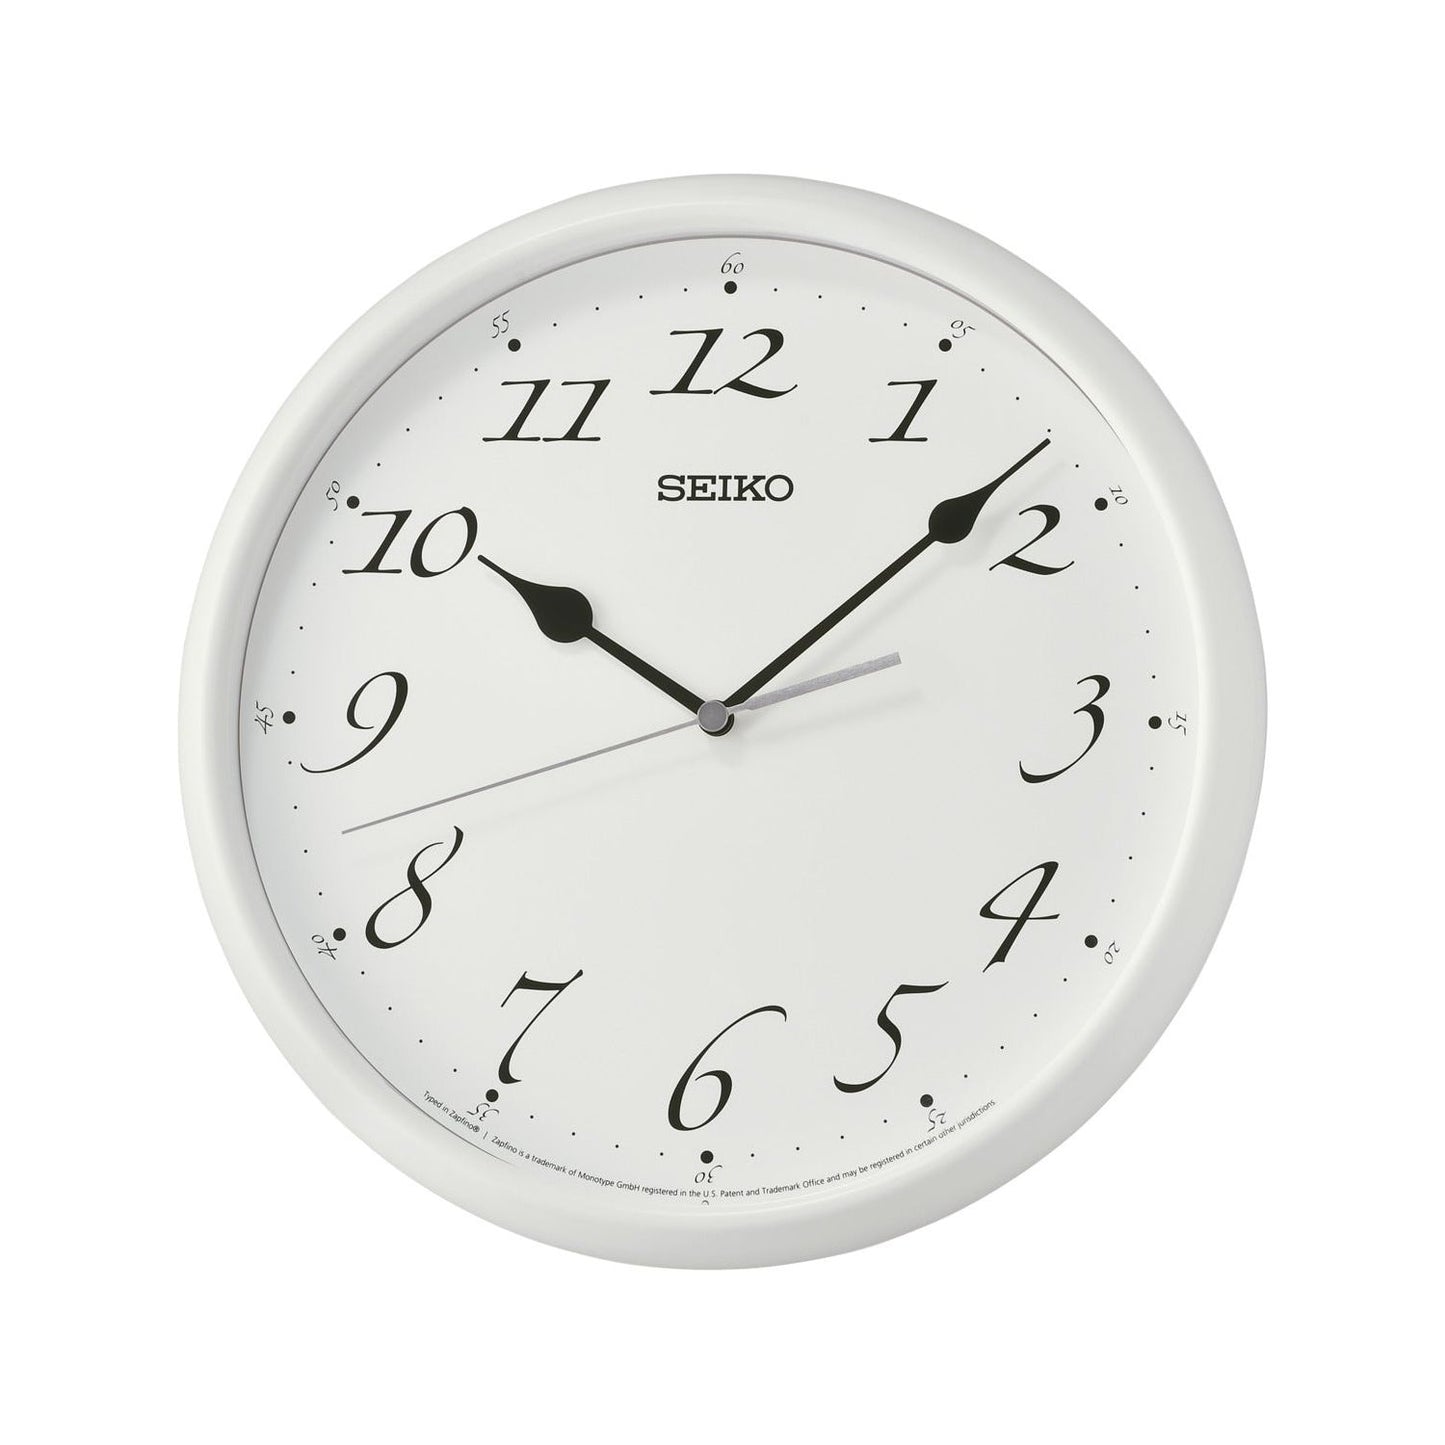 SEIKO CLOCKS SEIKO CLOCKS WATCHES Mod. QXA796W WATCHES seiko-clocks-watches-mod-qxa796w-1